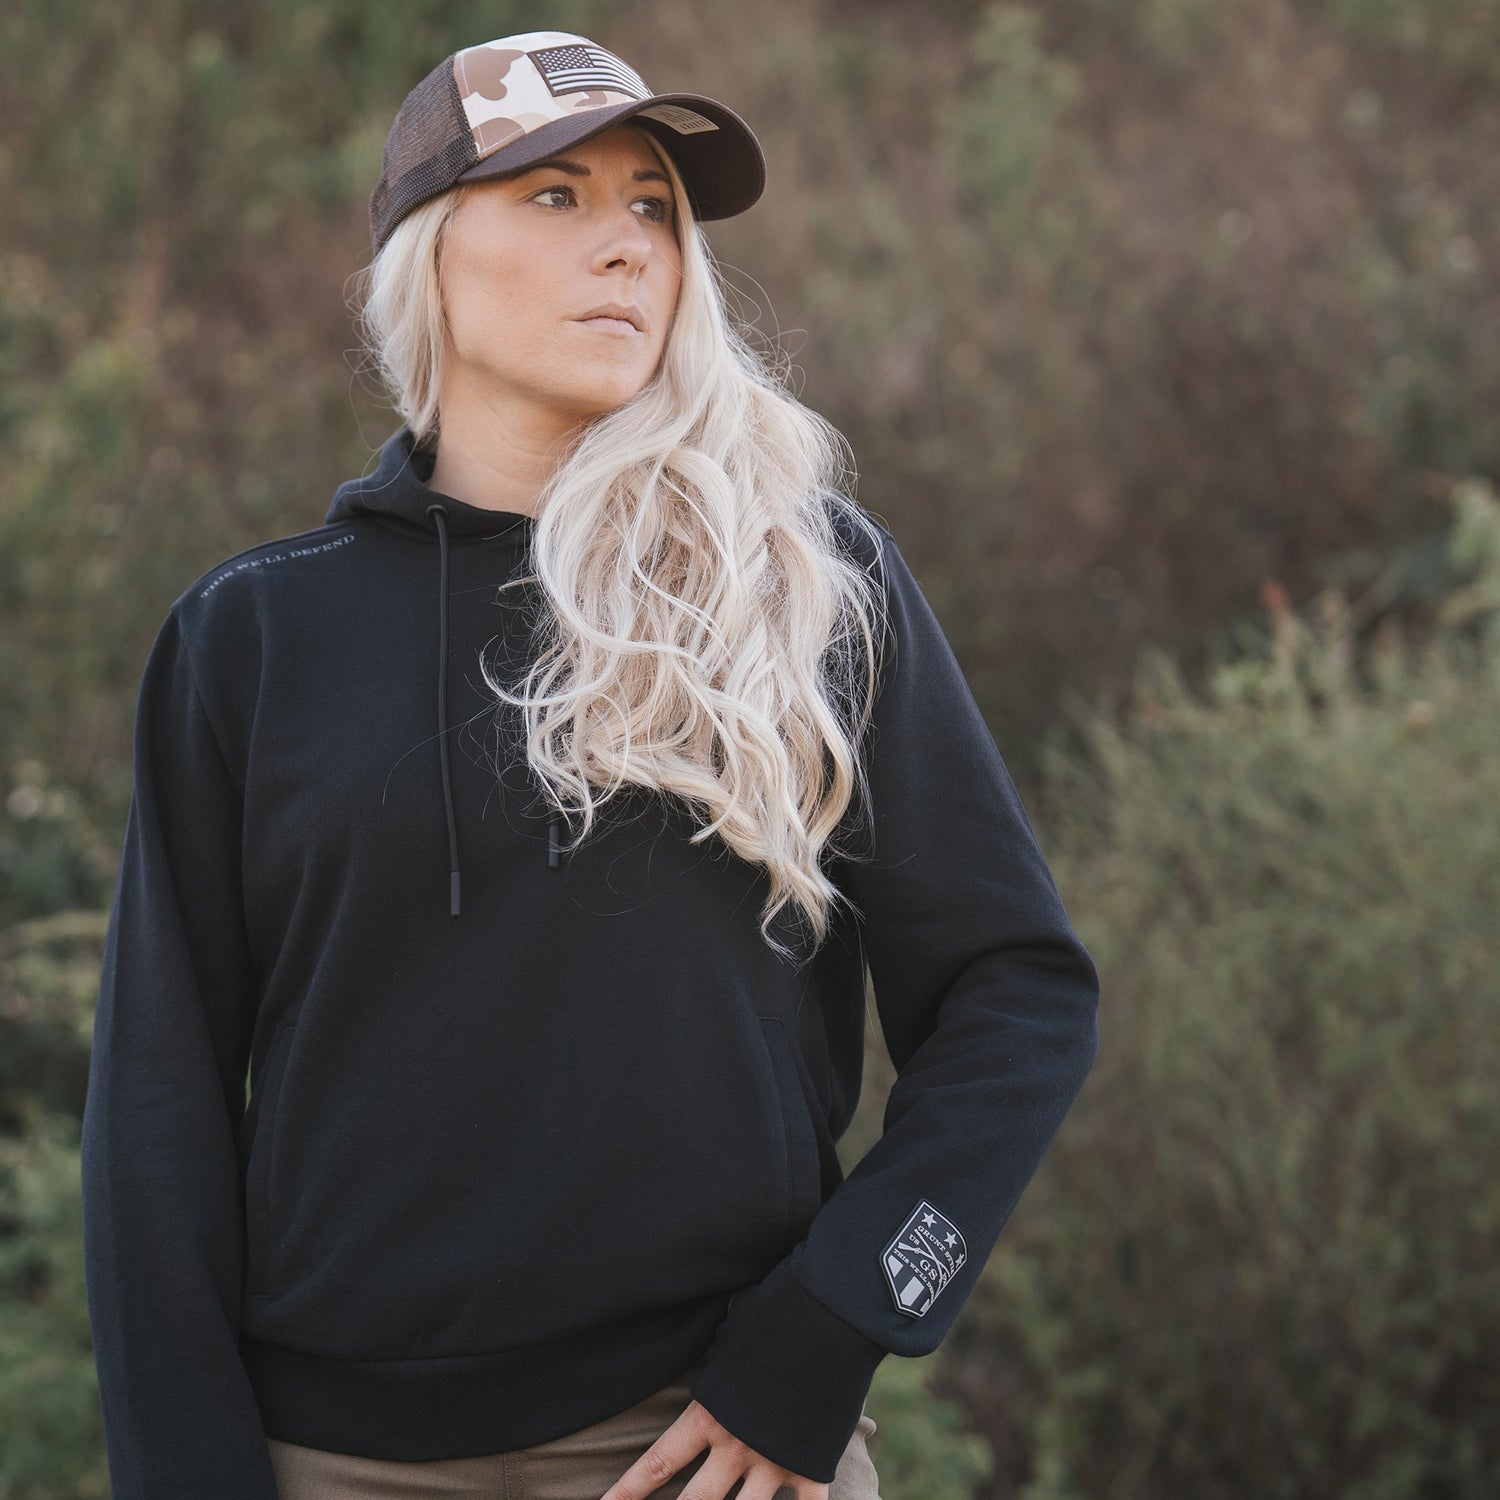 Women's Athletic Black Hooded Sweatshirt for Fitness